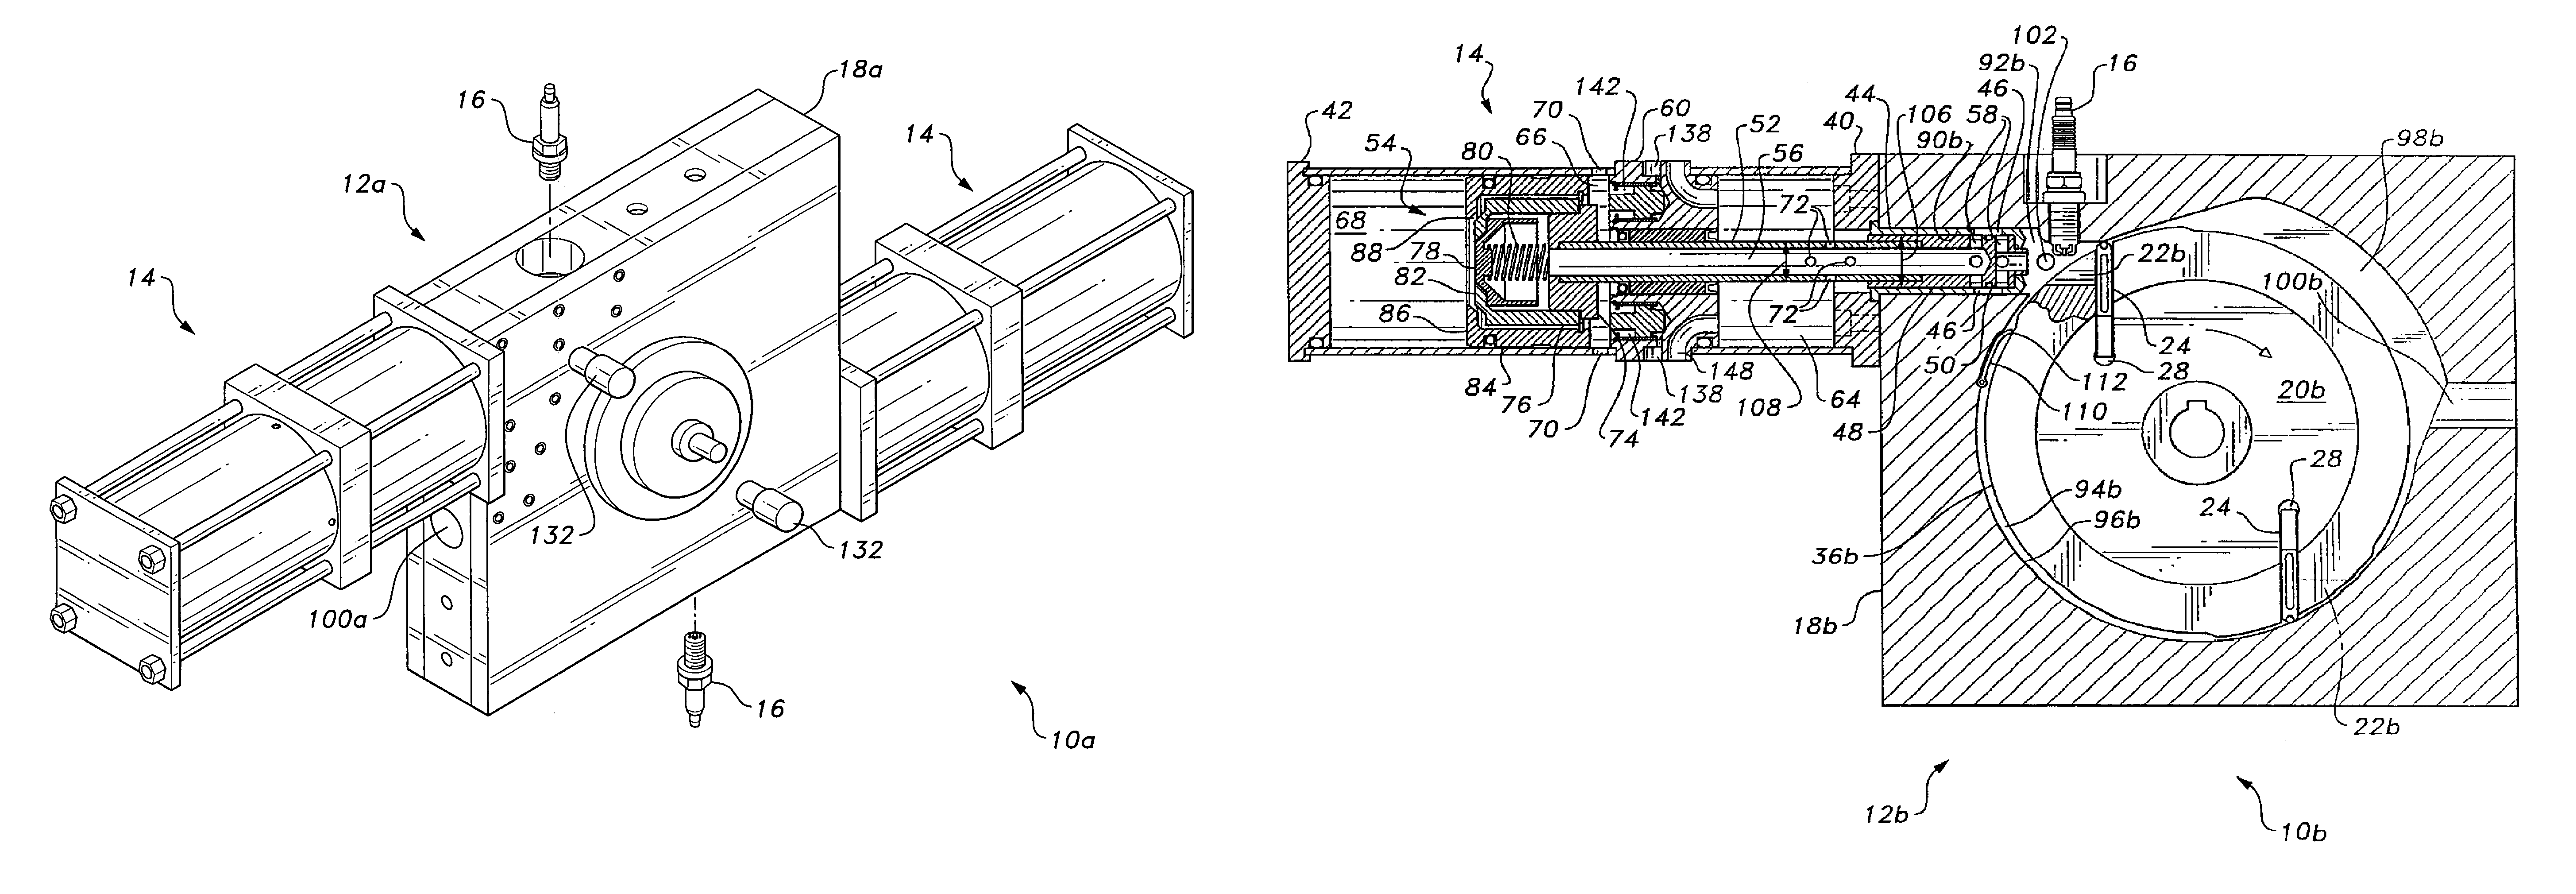 Split-chamber rotary engine